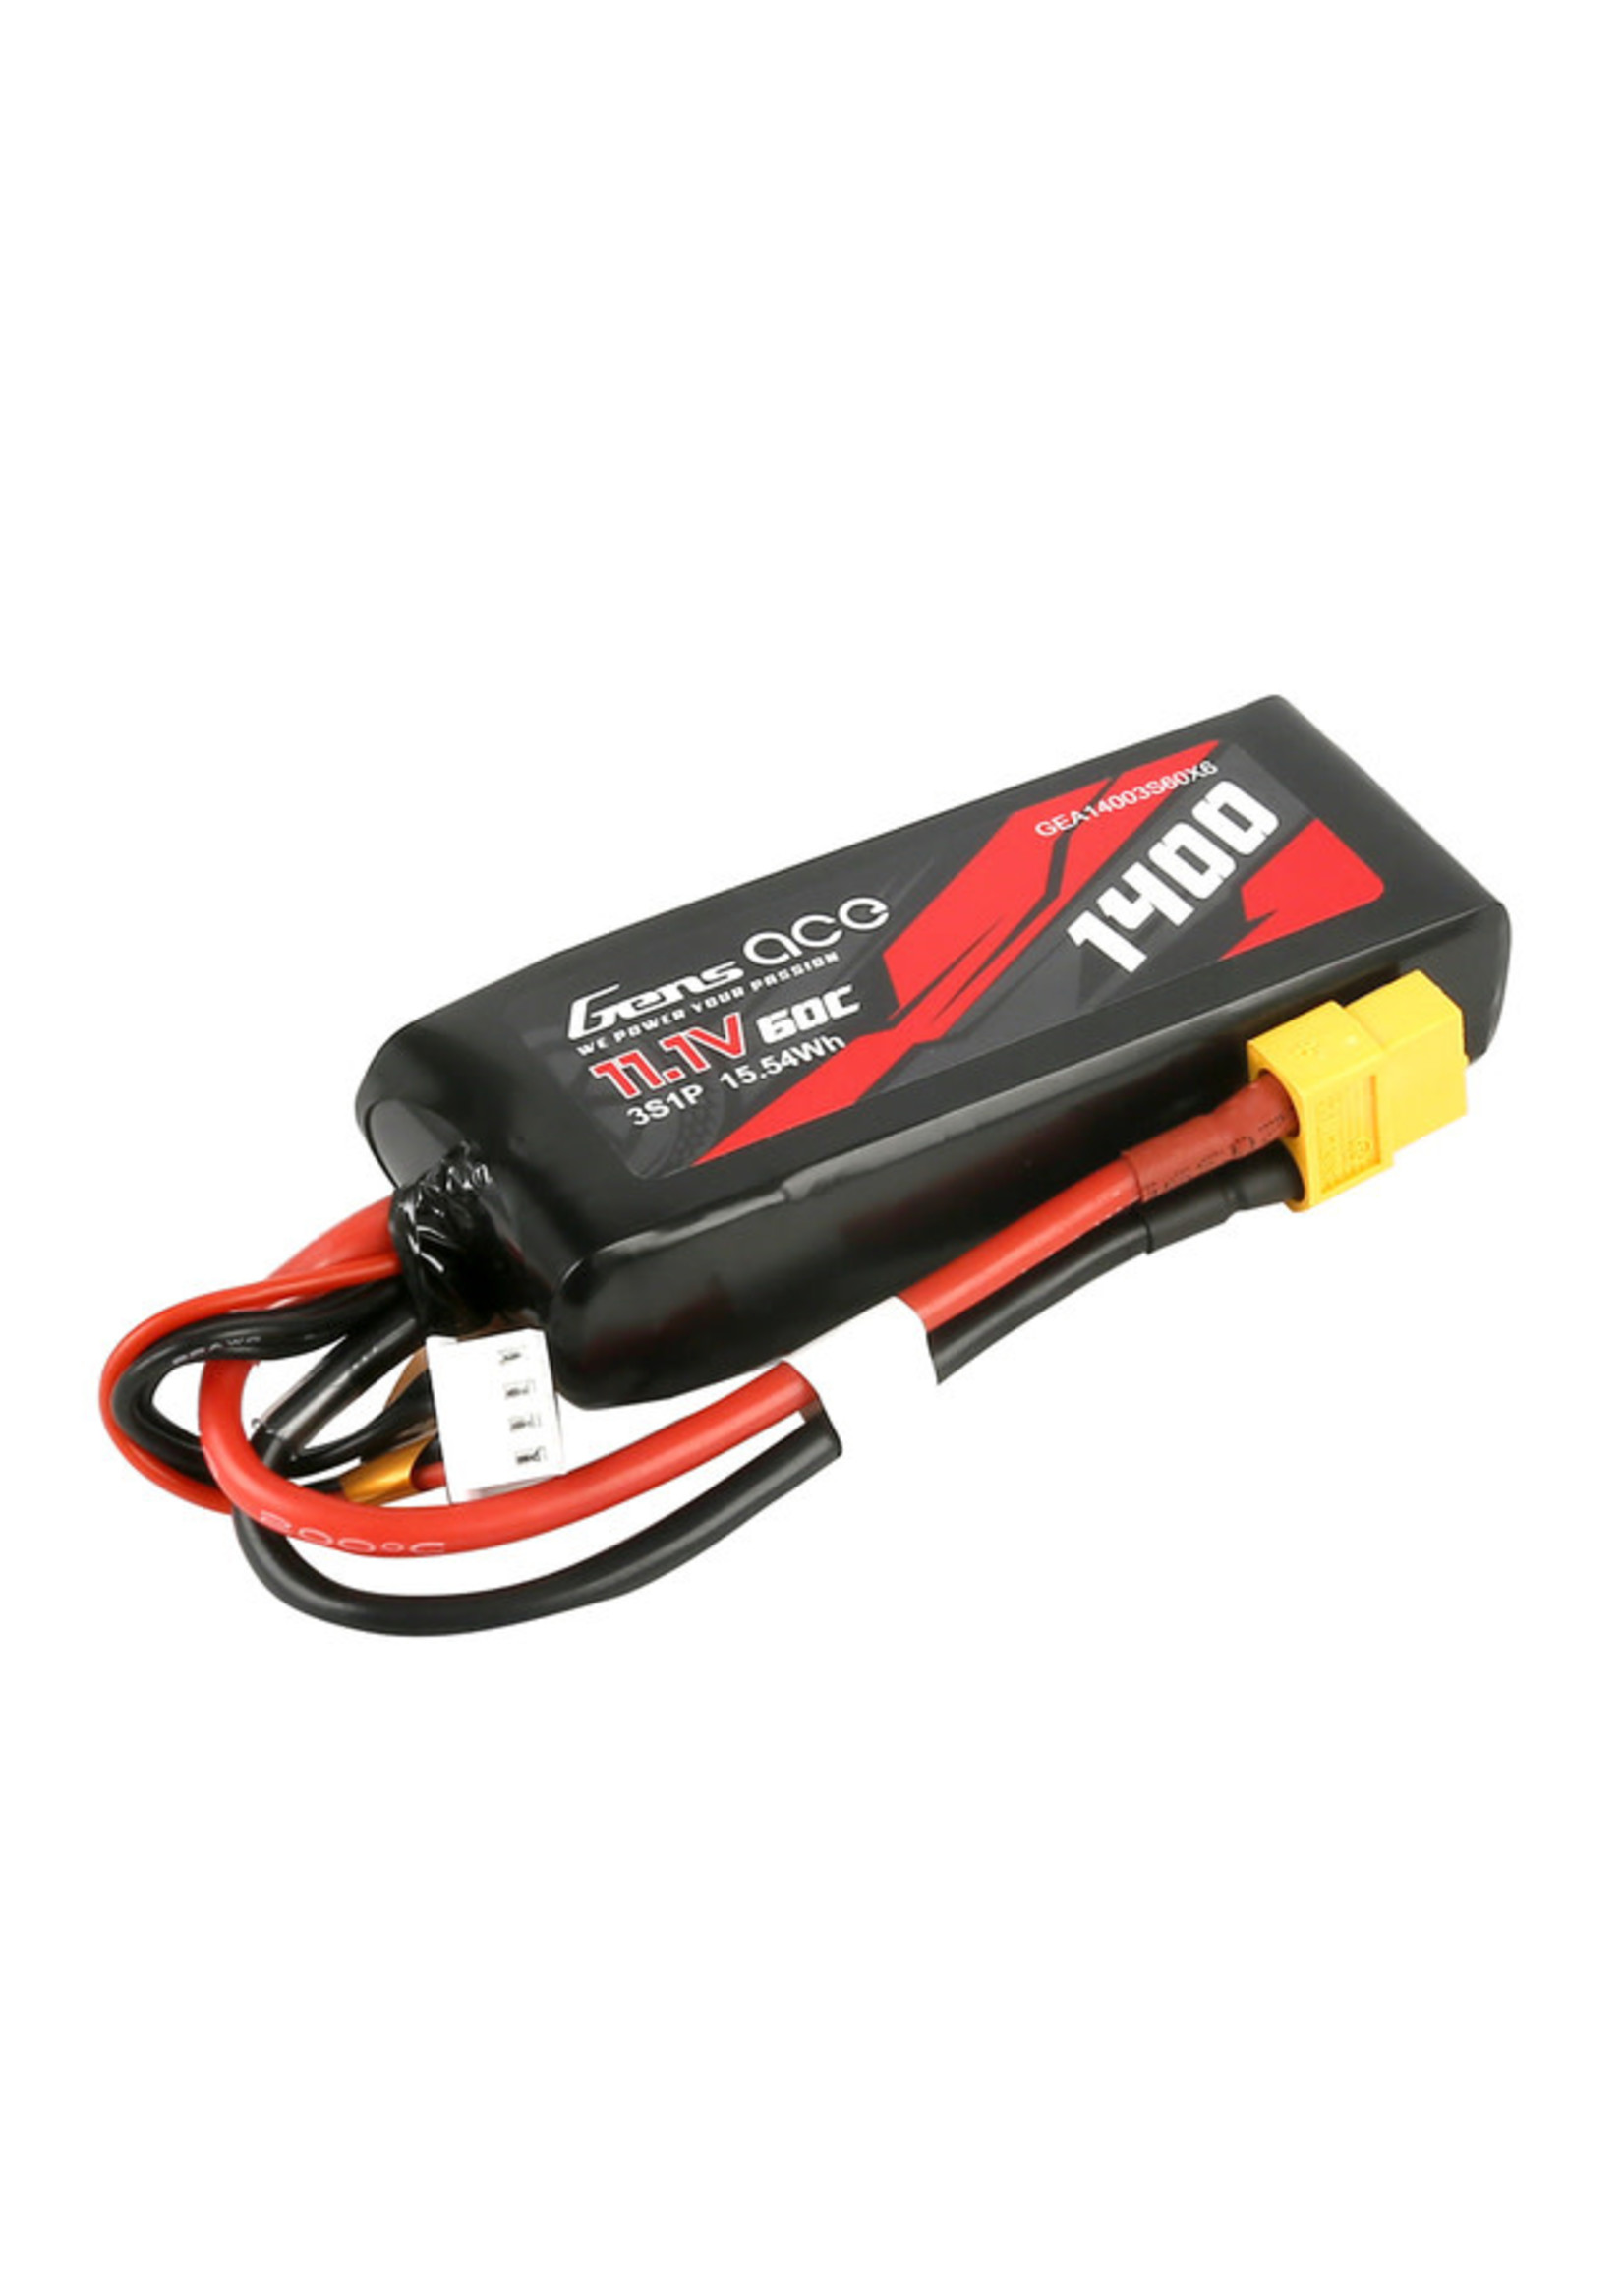 GensAce/Tattu GEA14003S60X6 Gens Ace 1400mAh 11.1V 60C 3S1P Lipo Battery Pack with XT60 Plug